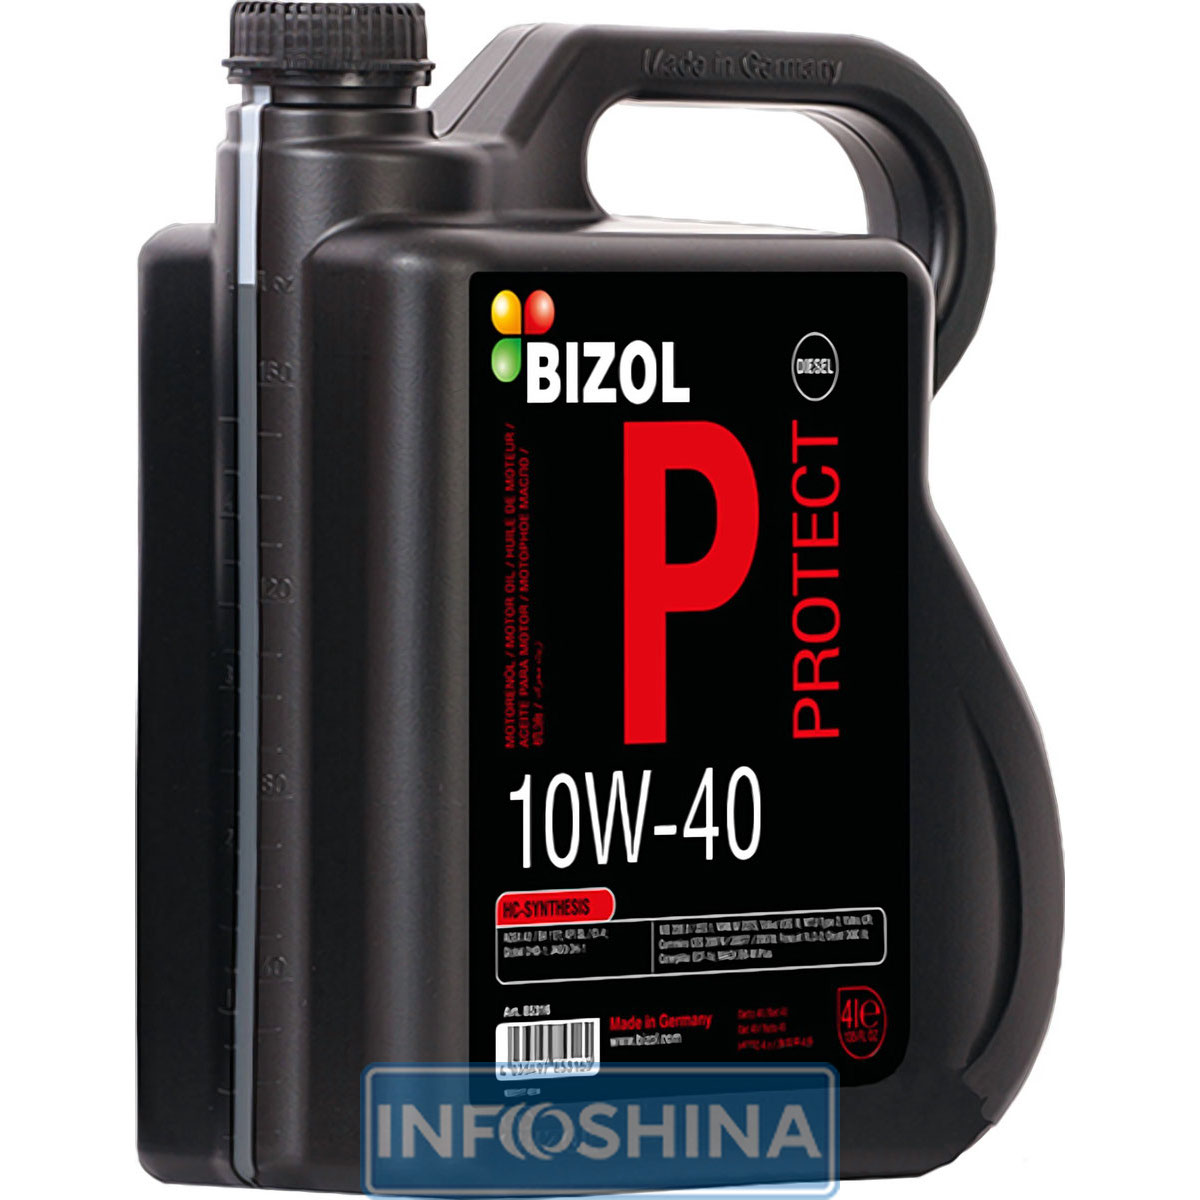 Купить масло Bizol Protect 10W-40 (4л)